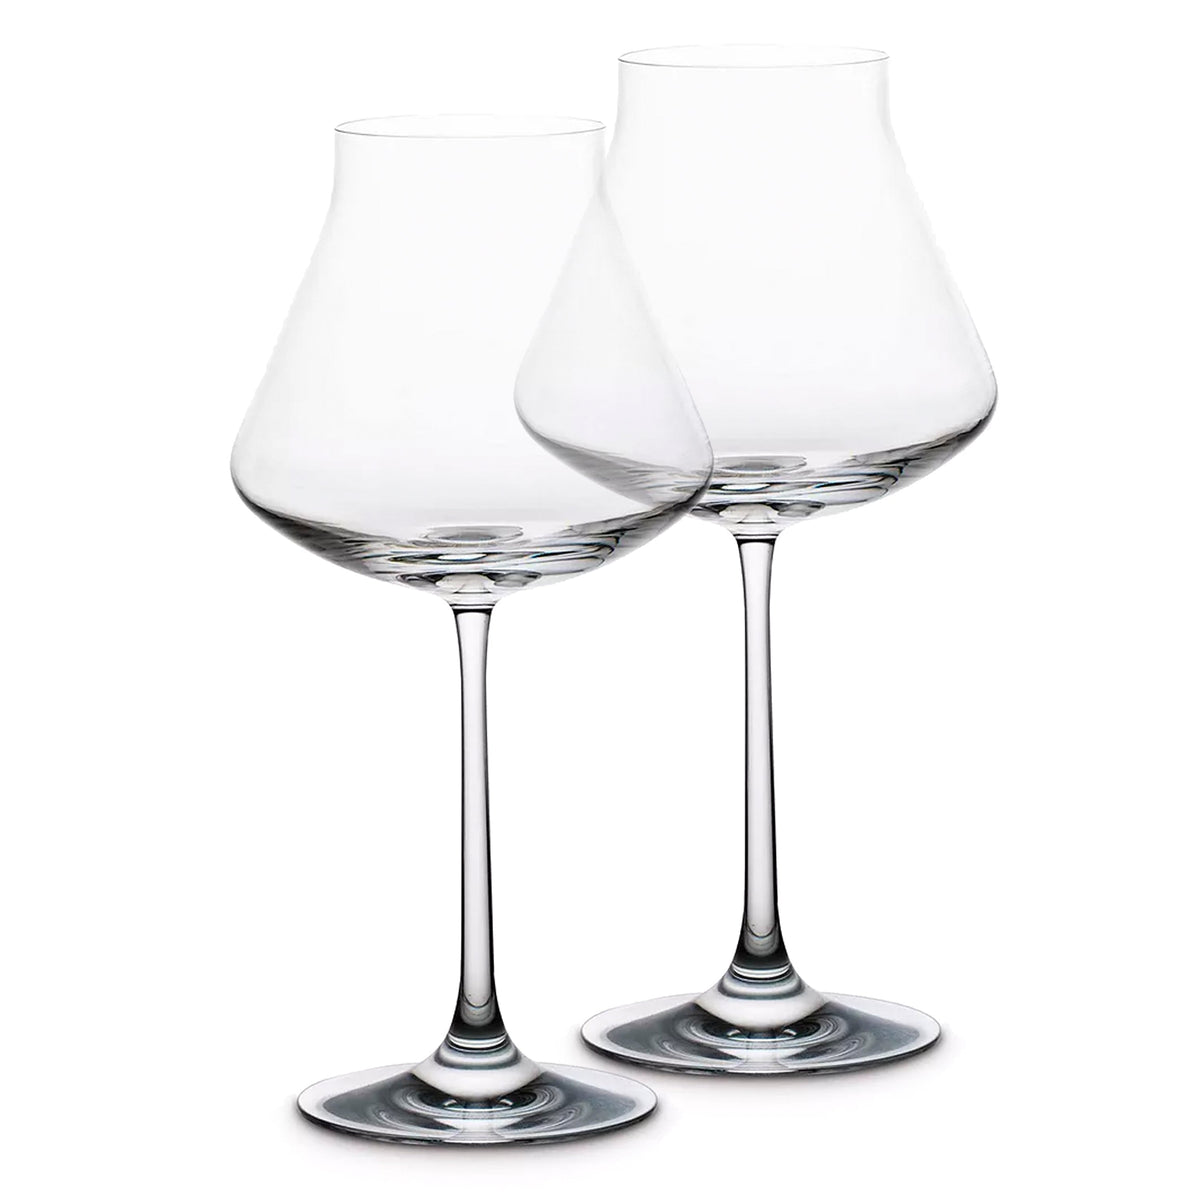 Chateau XL Wine Glass, Set of 2